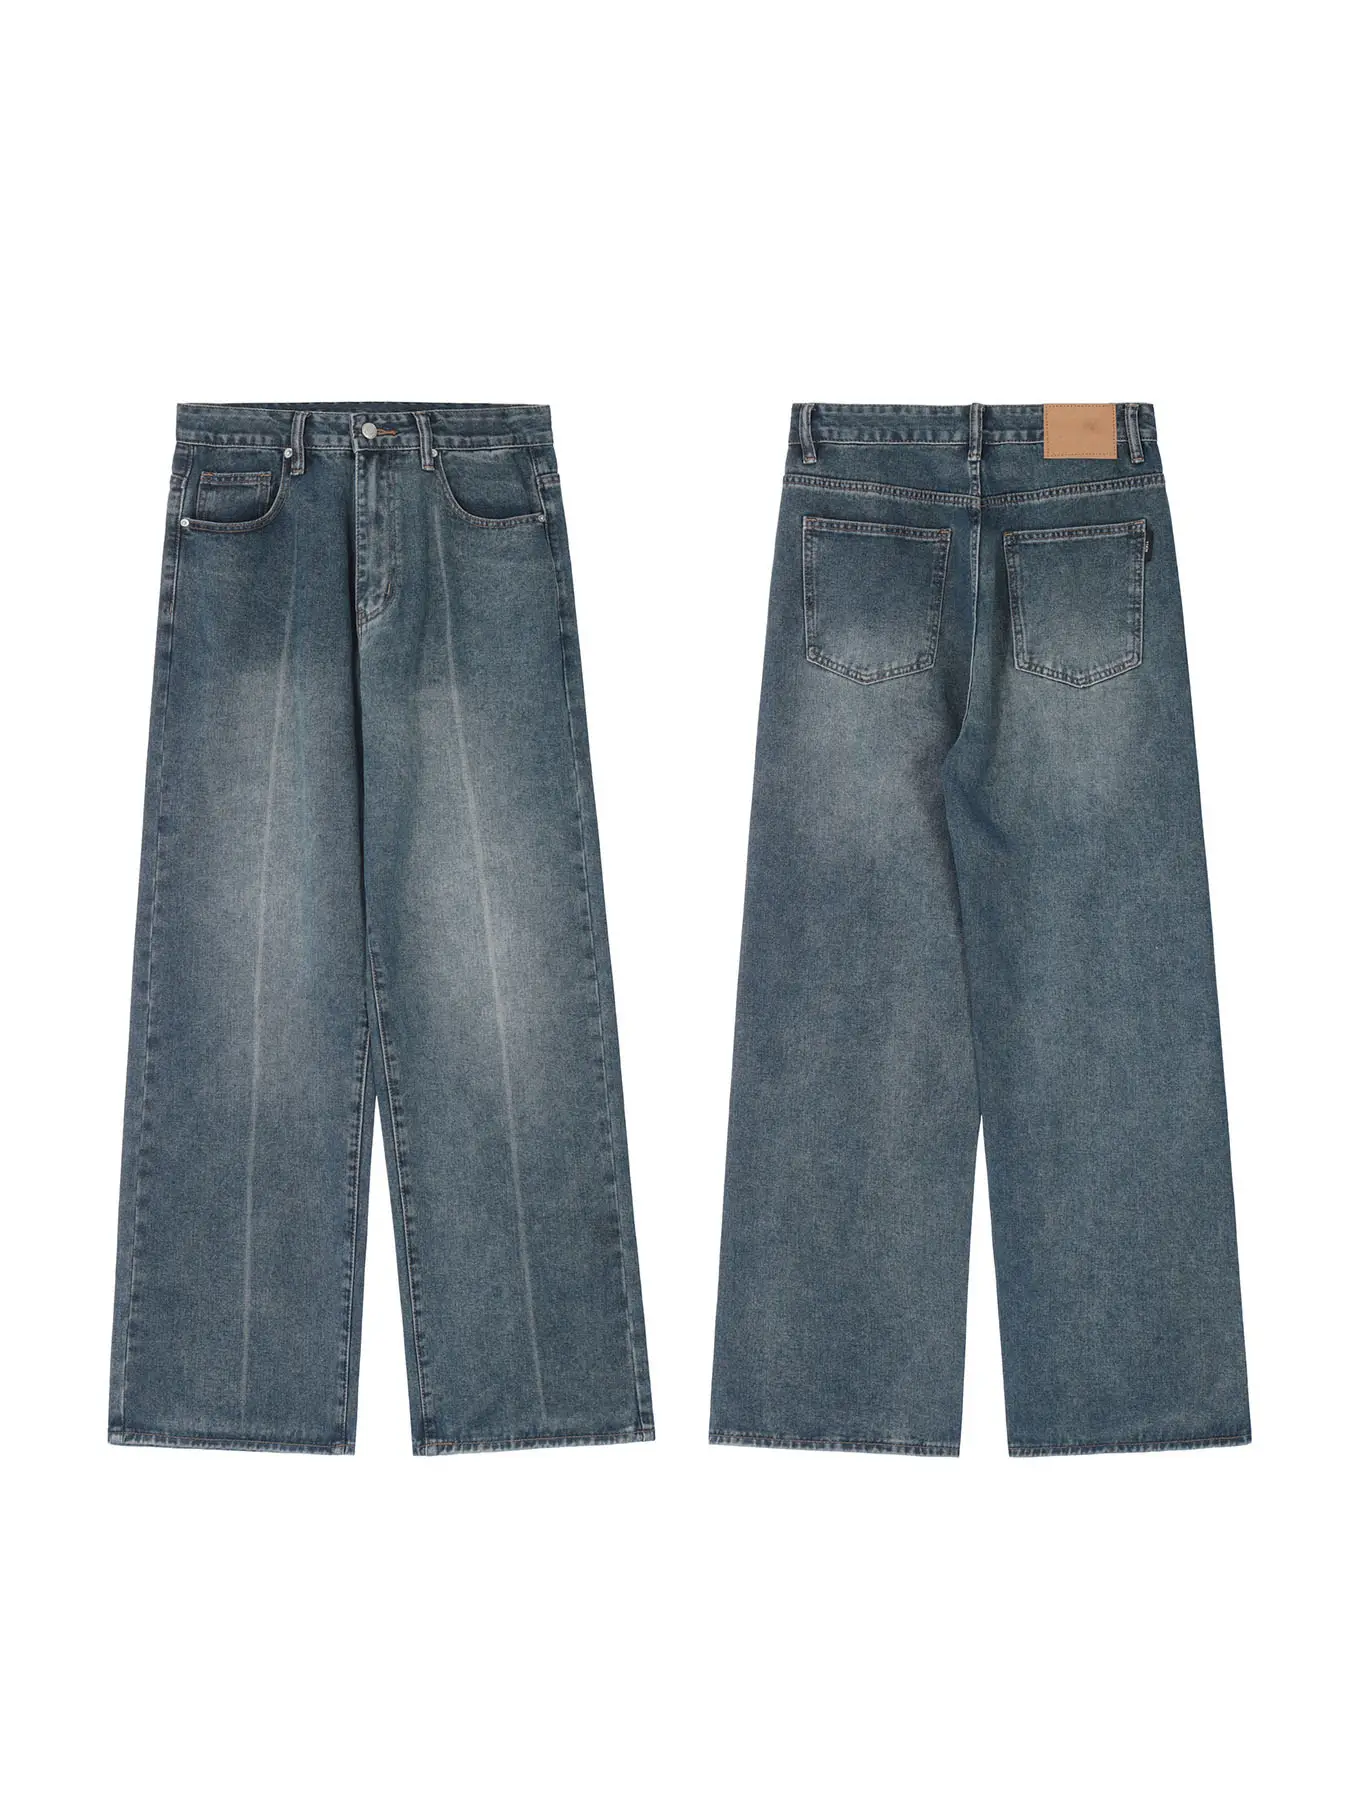 Fabricantes de roupas jeans unissex personalizados com vibes vintage calças largas calças jeans largas masculinas